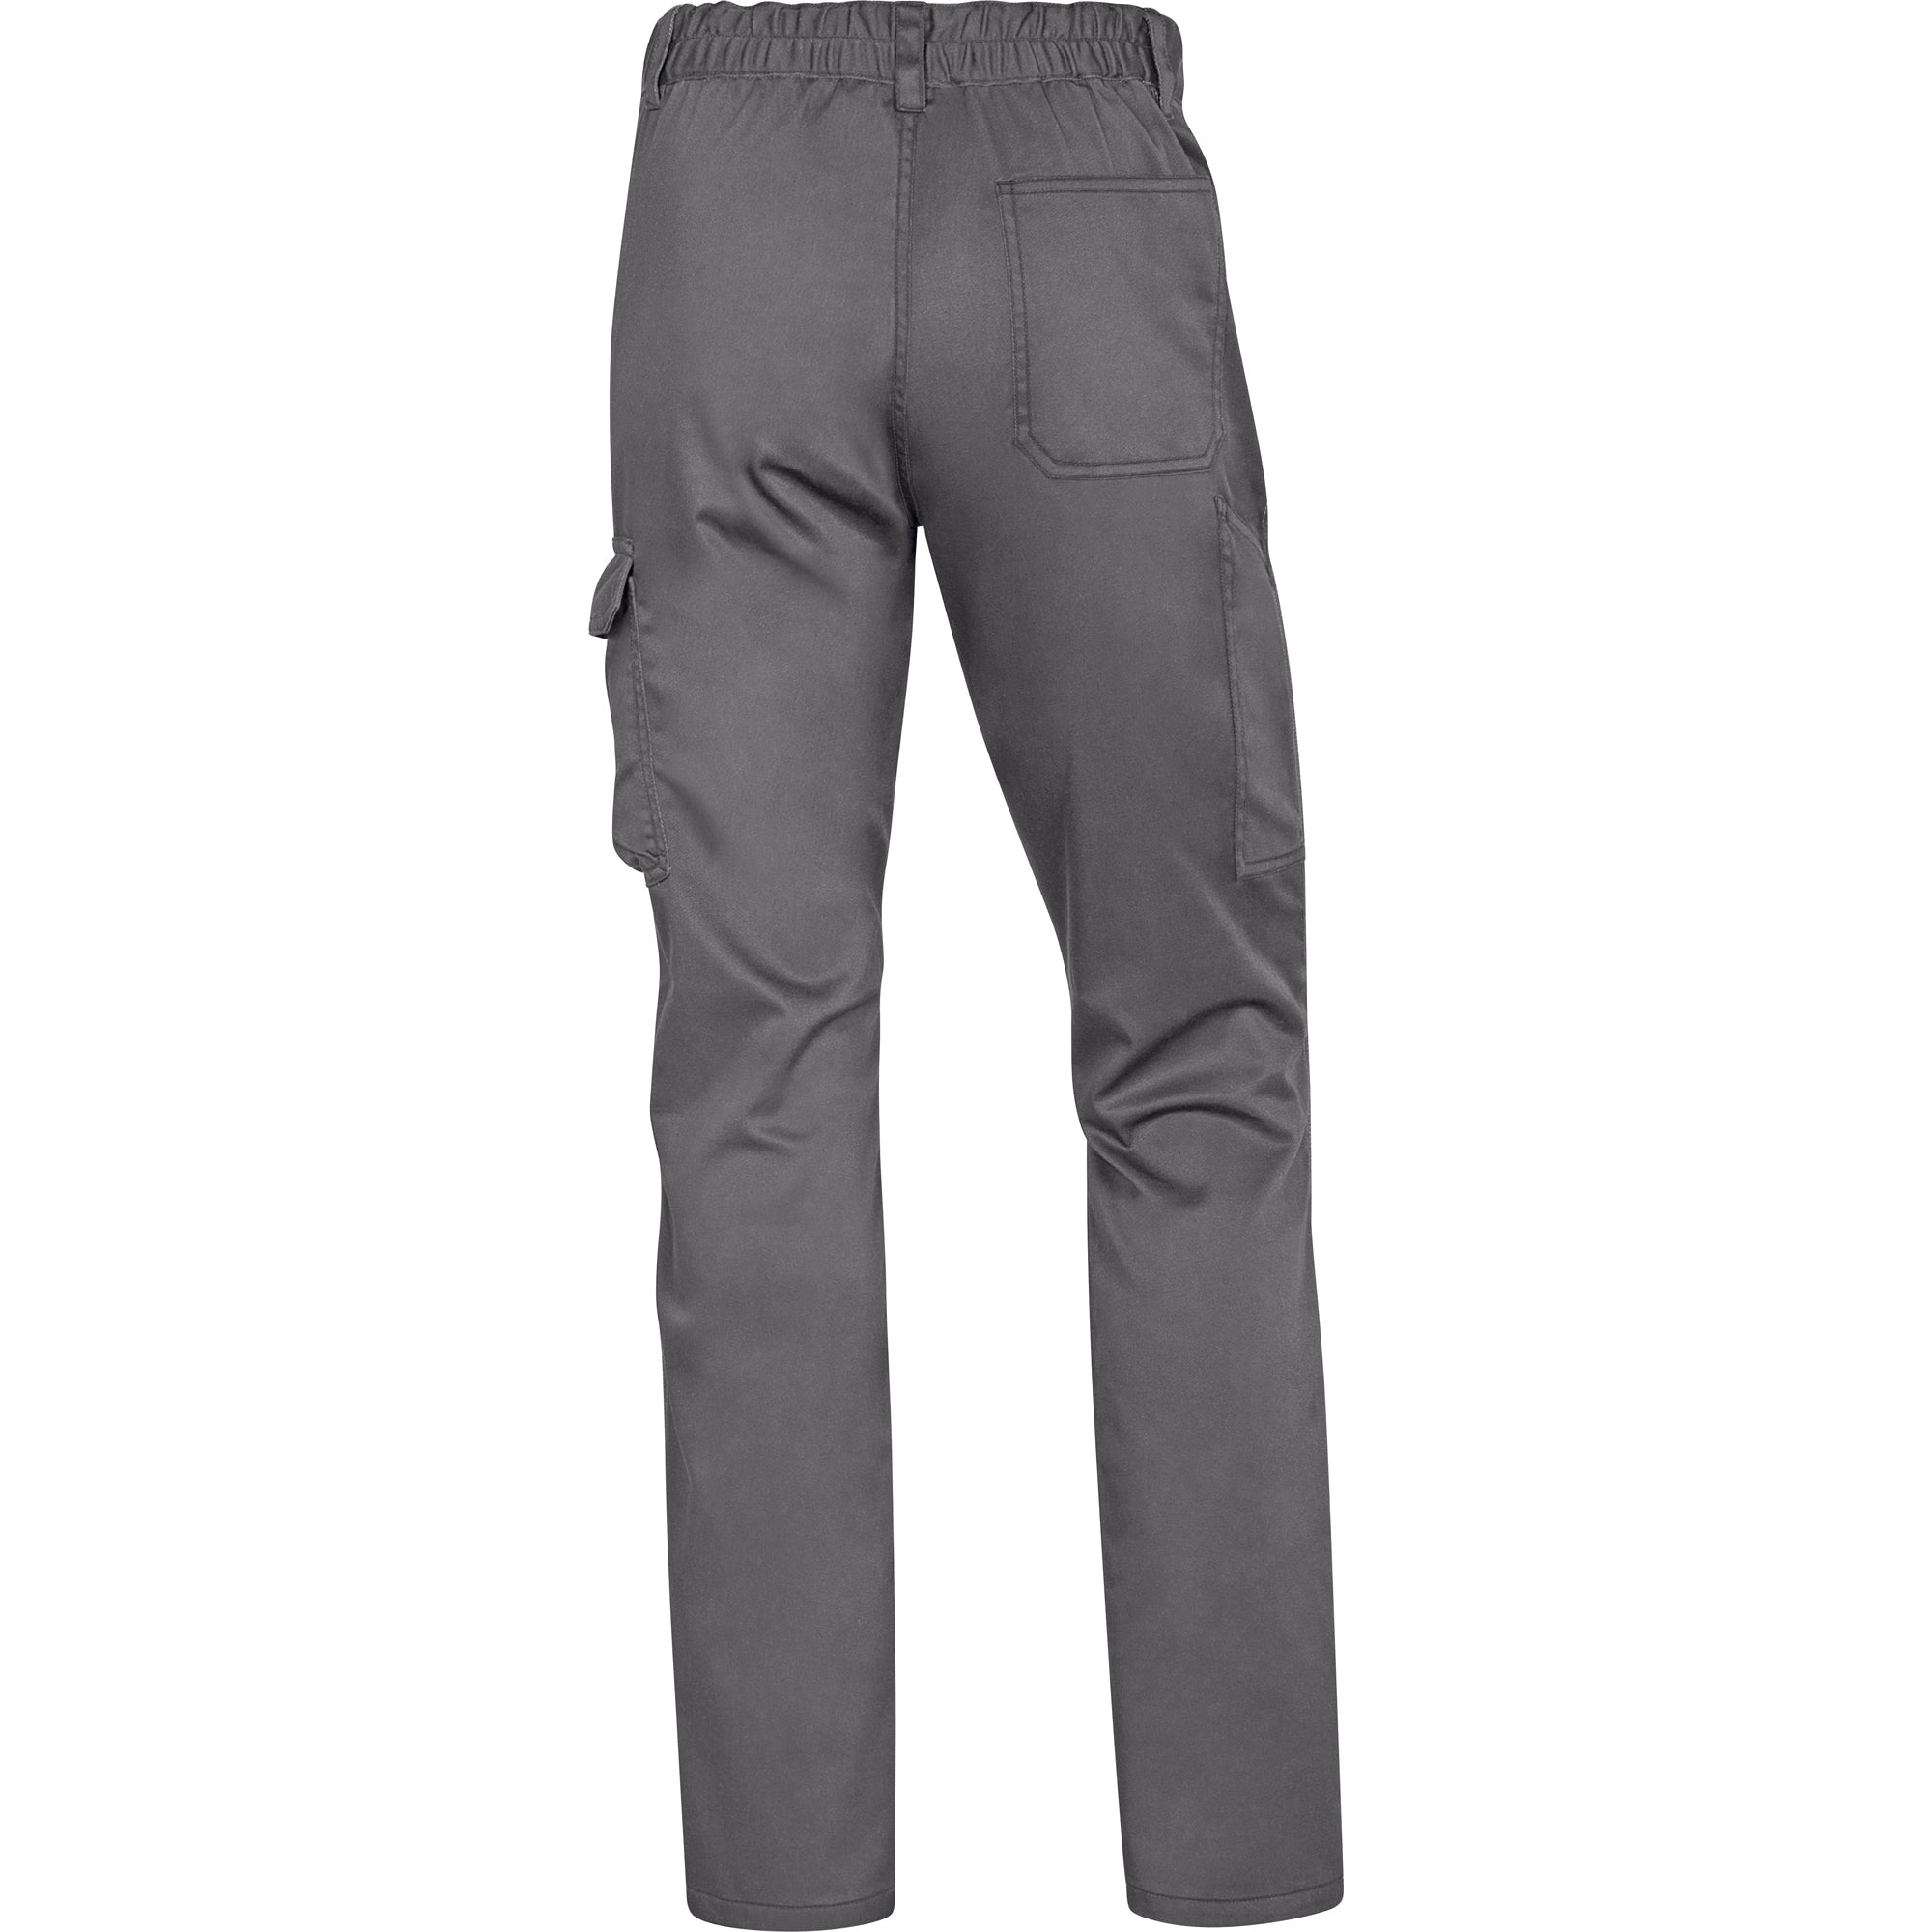 deltaplus-pantalone-lavoro-panostrpa-tg-m-grigio-nero